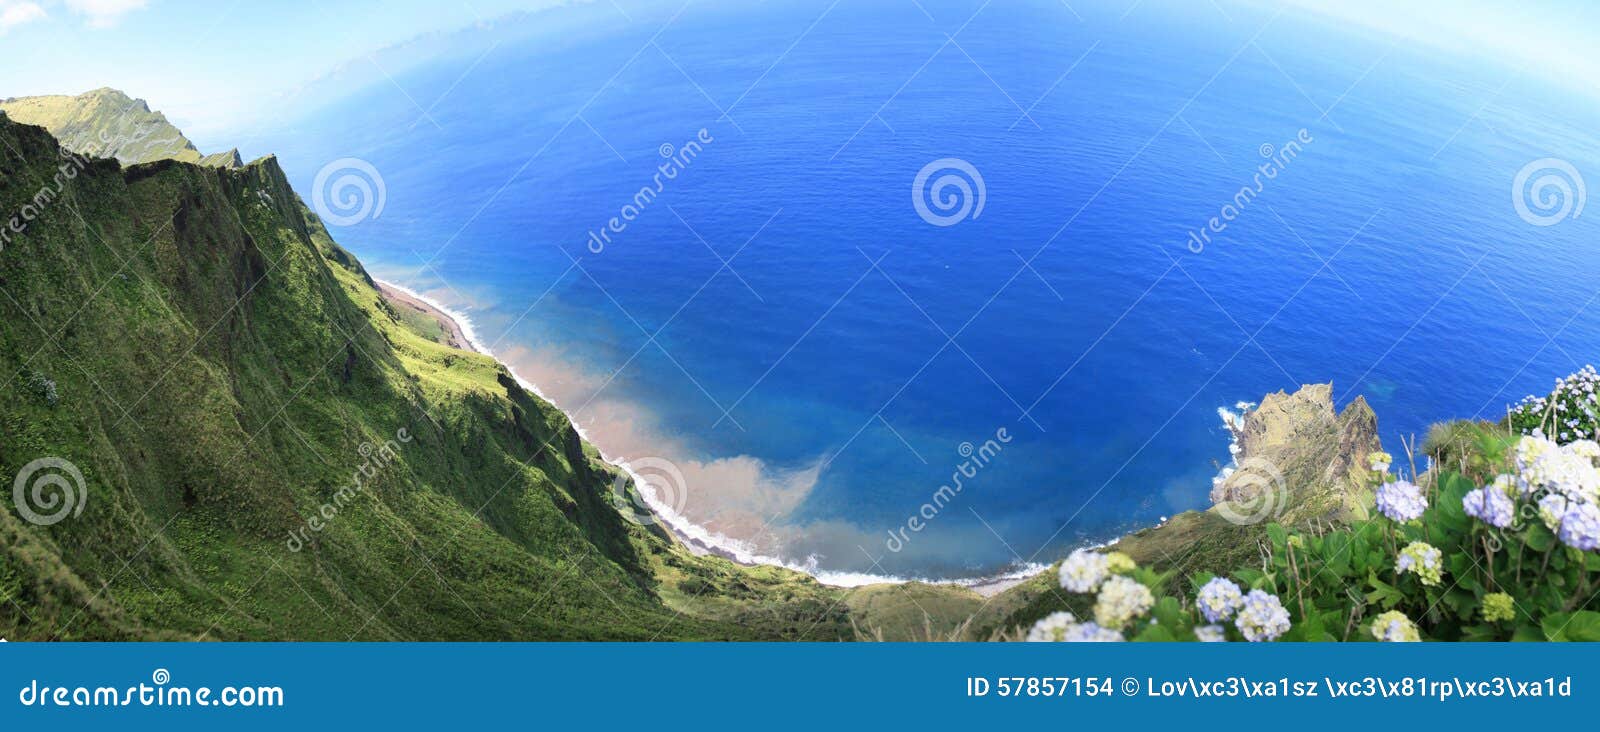 mossy cliff on corvo island and the atlantic ocean